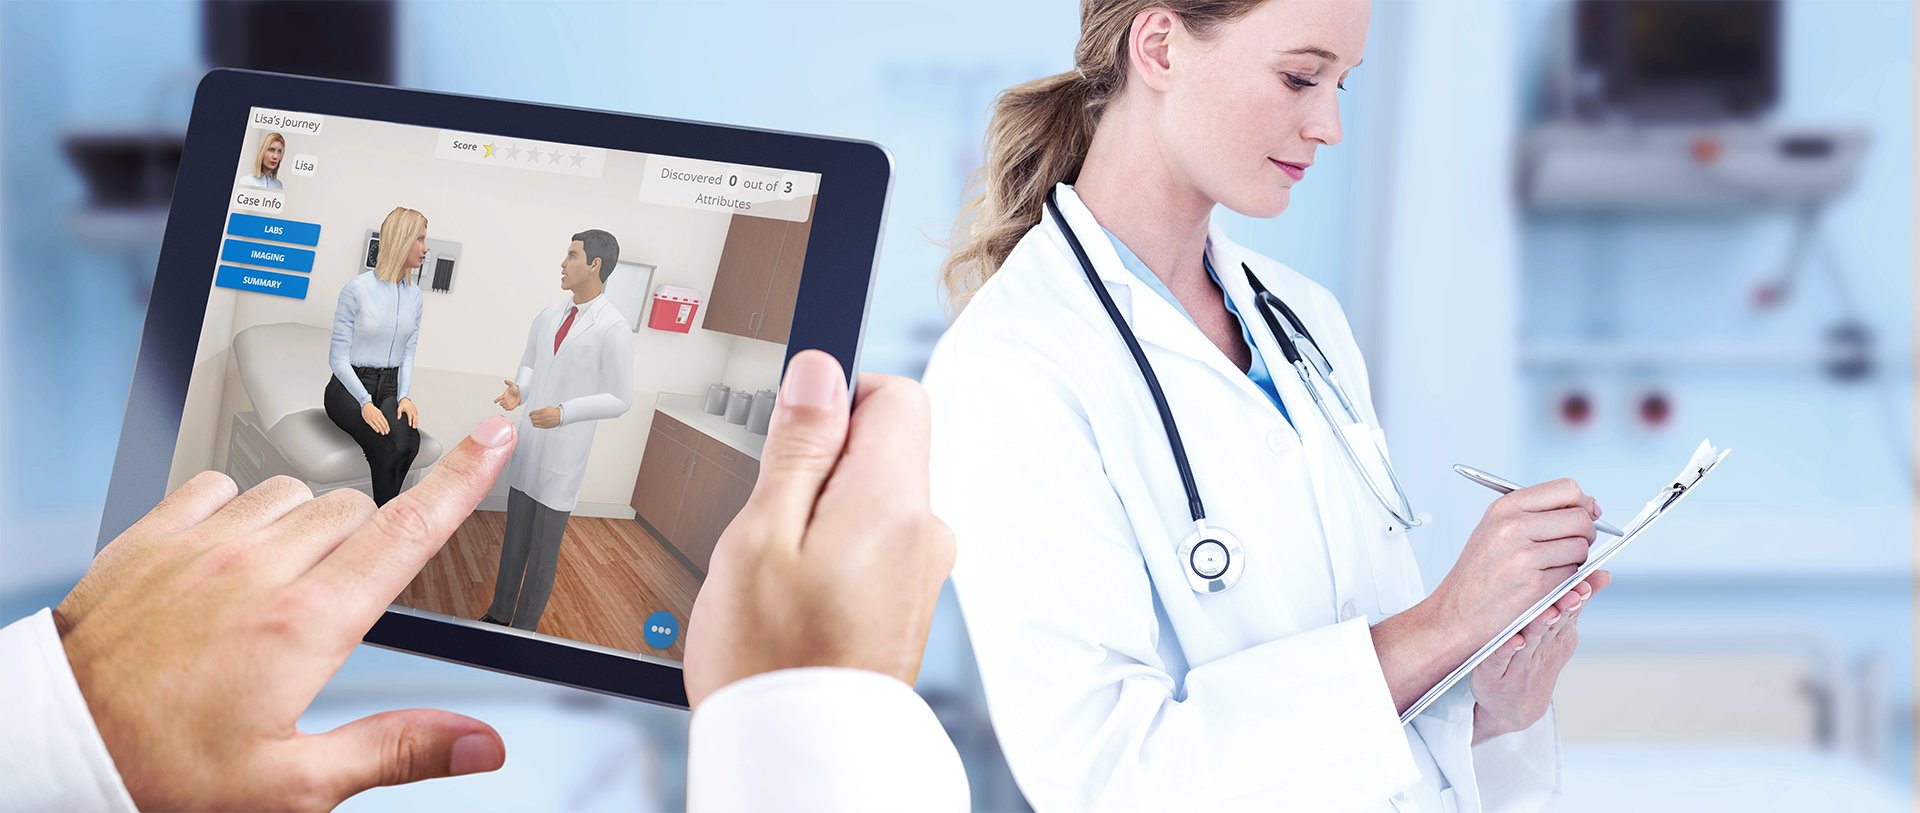 Doctor using medical education AliveSim simulation on tablet